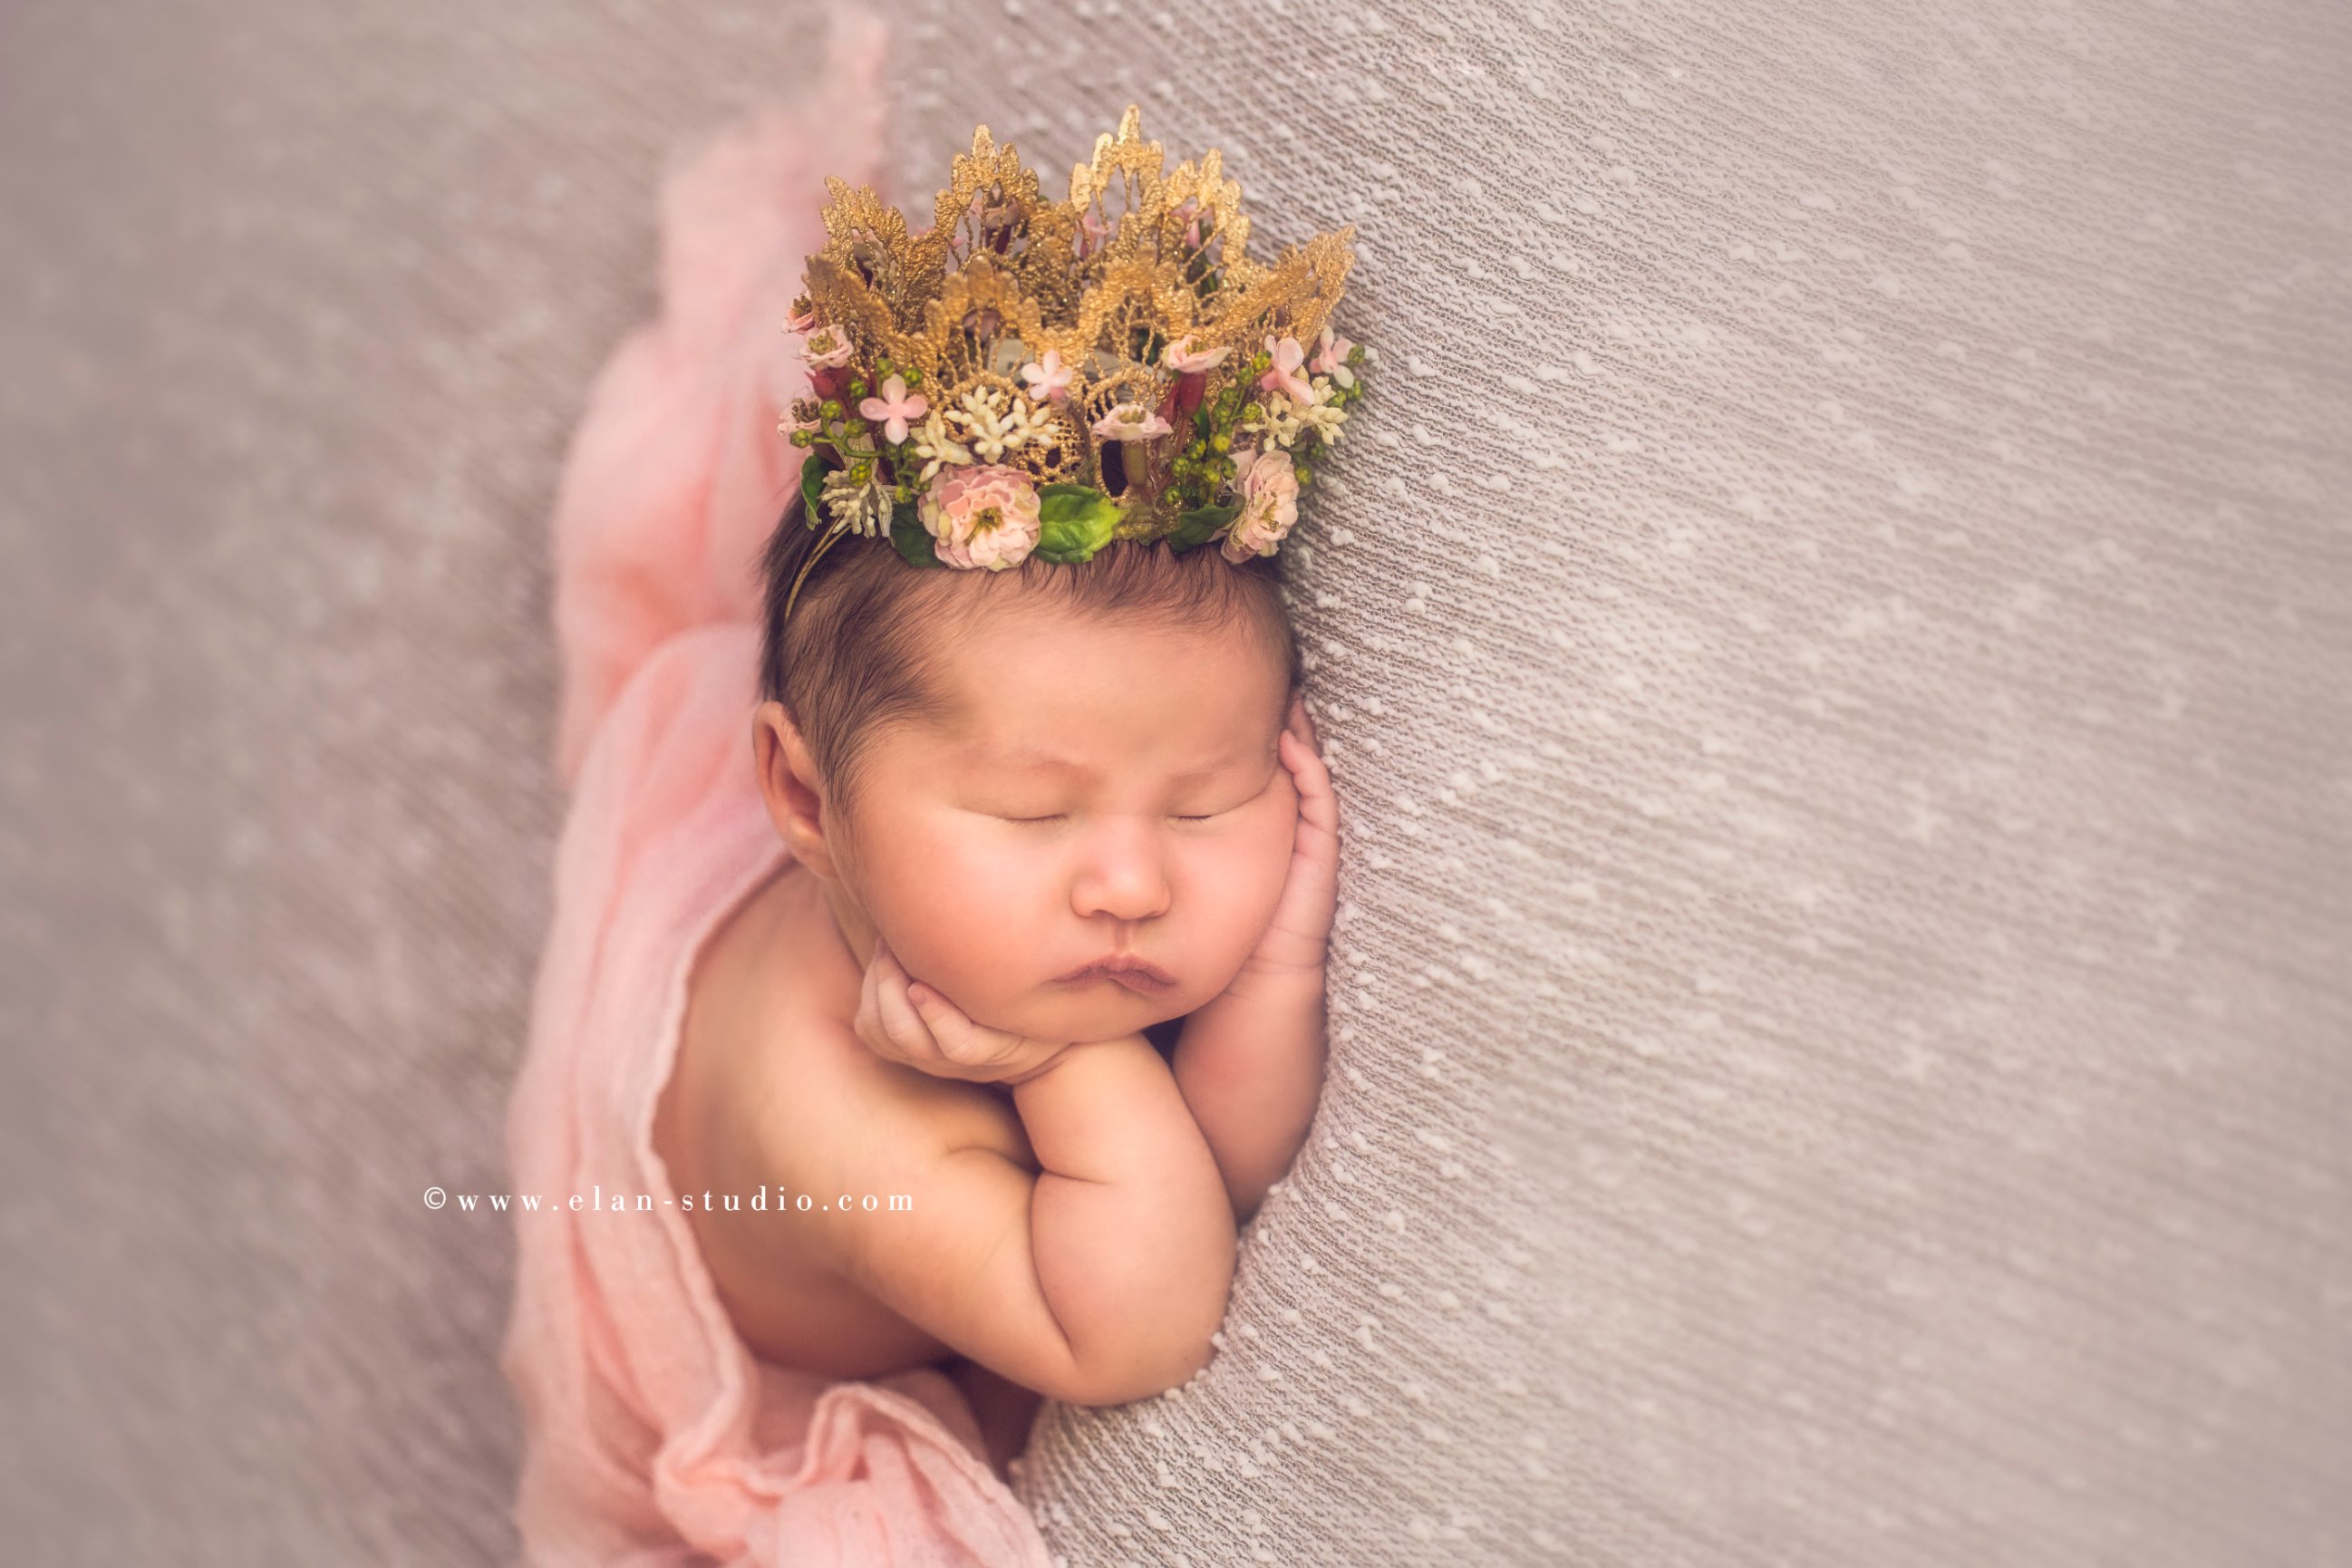 newborn wearing flower crown, on light gray blanket